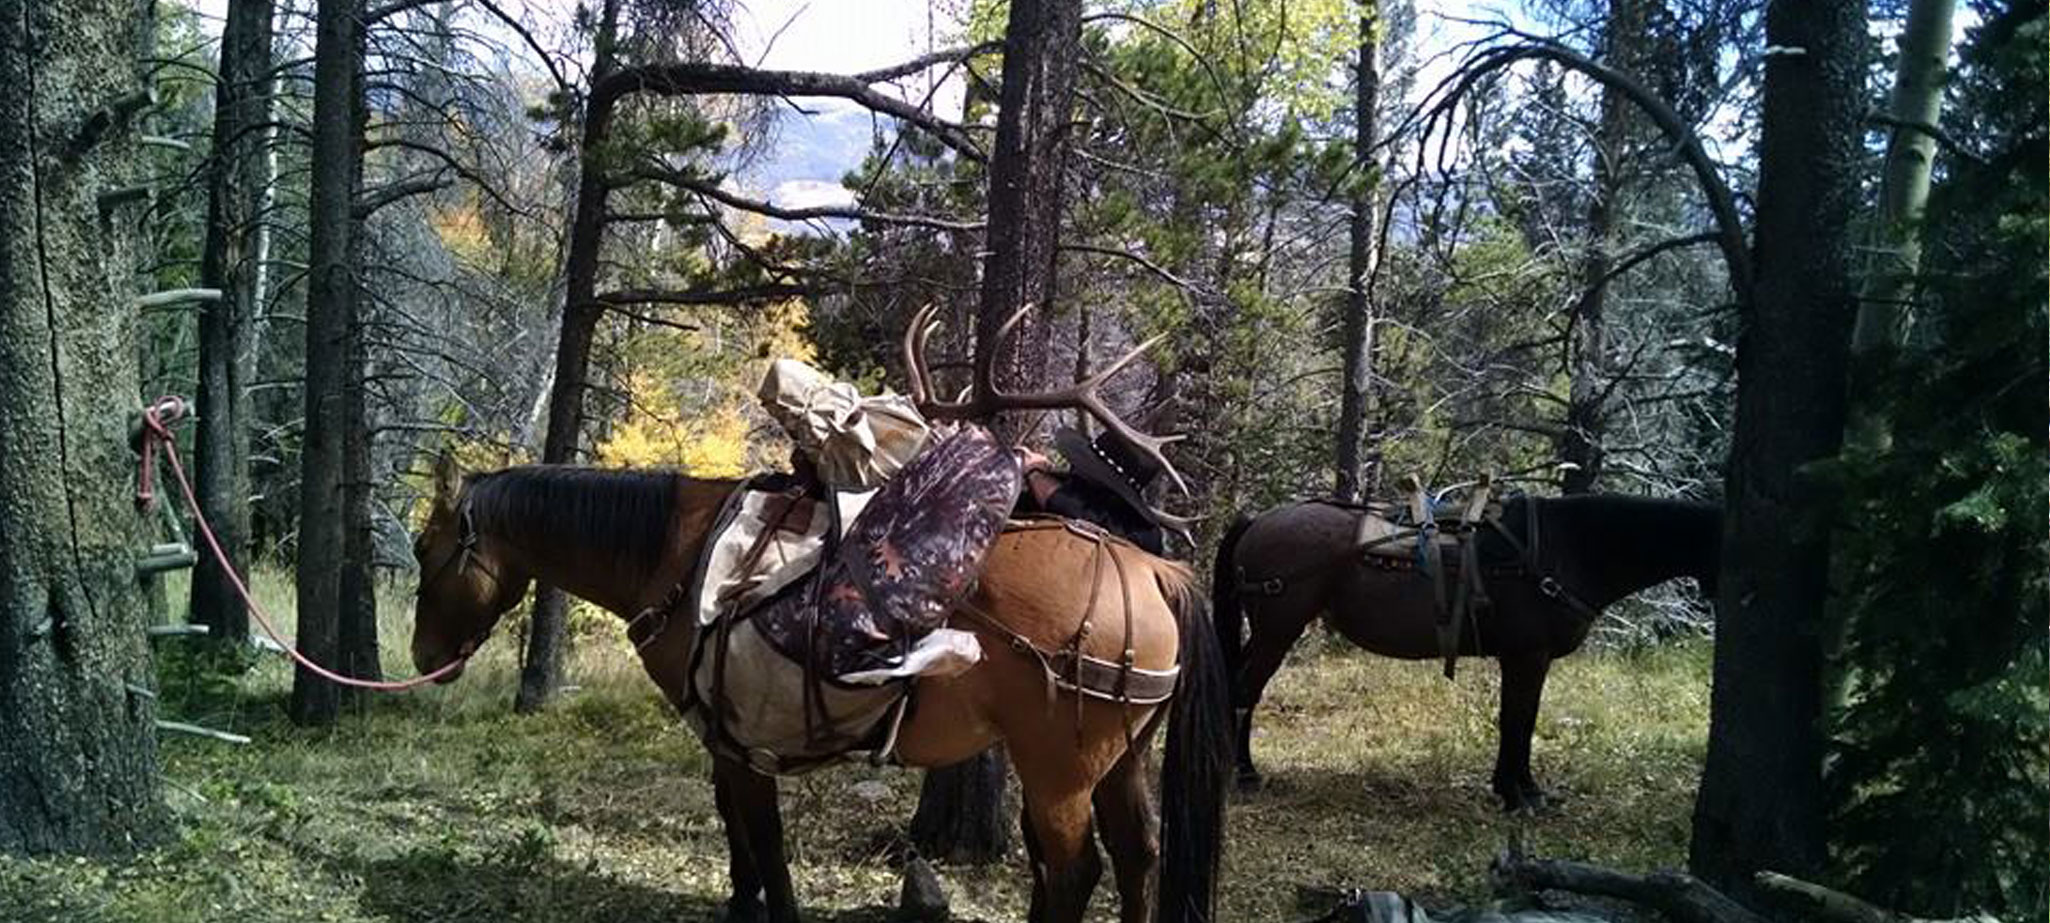 guided horseback hunting trips